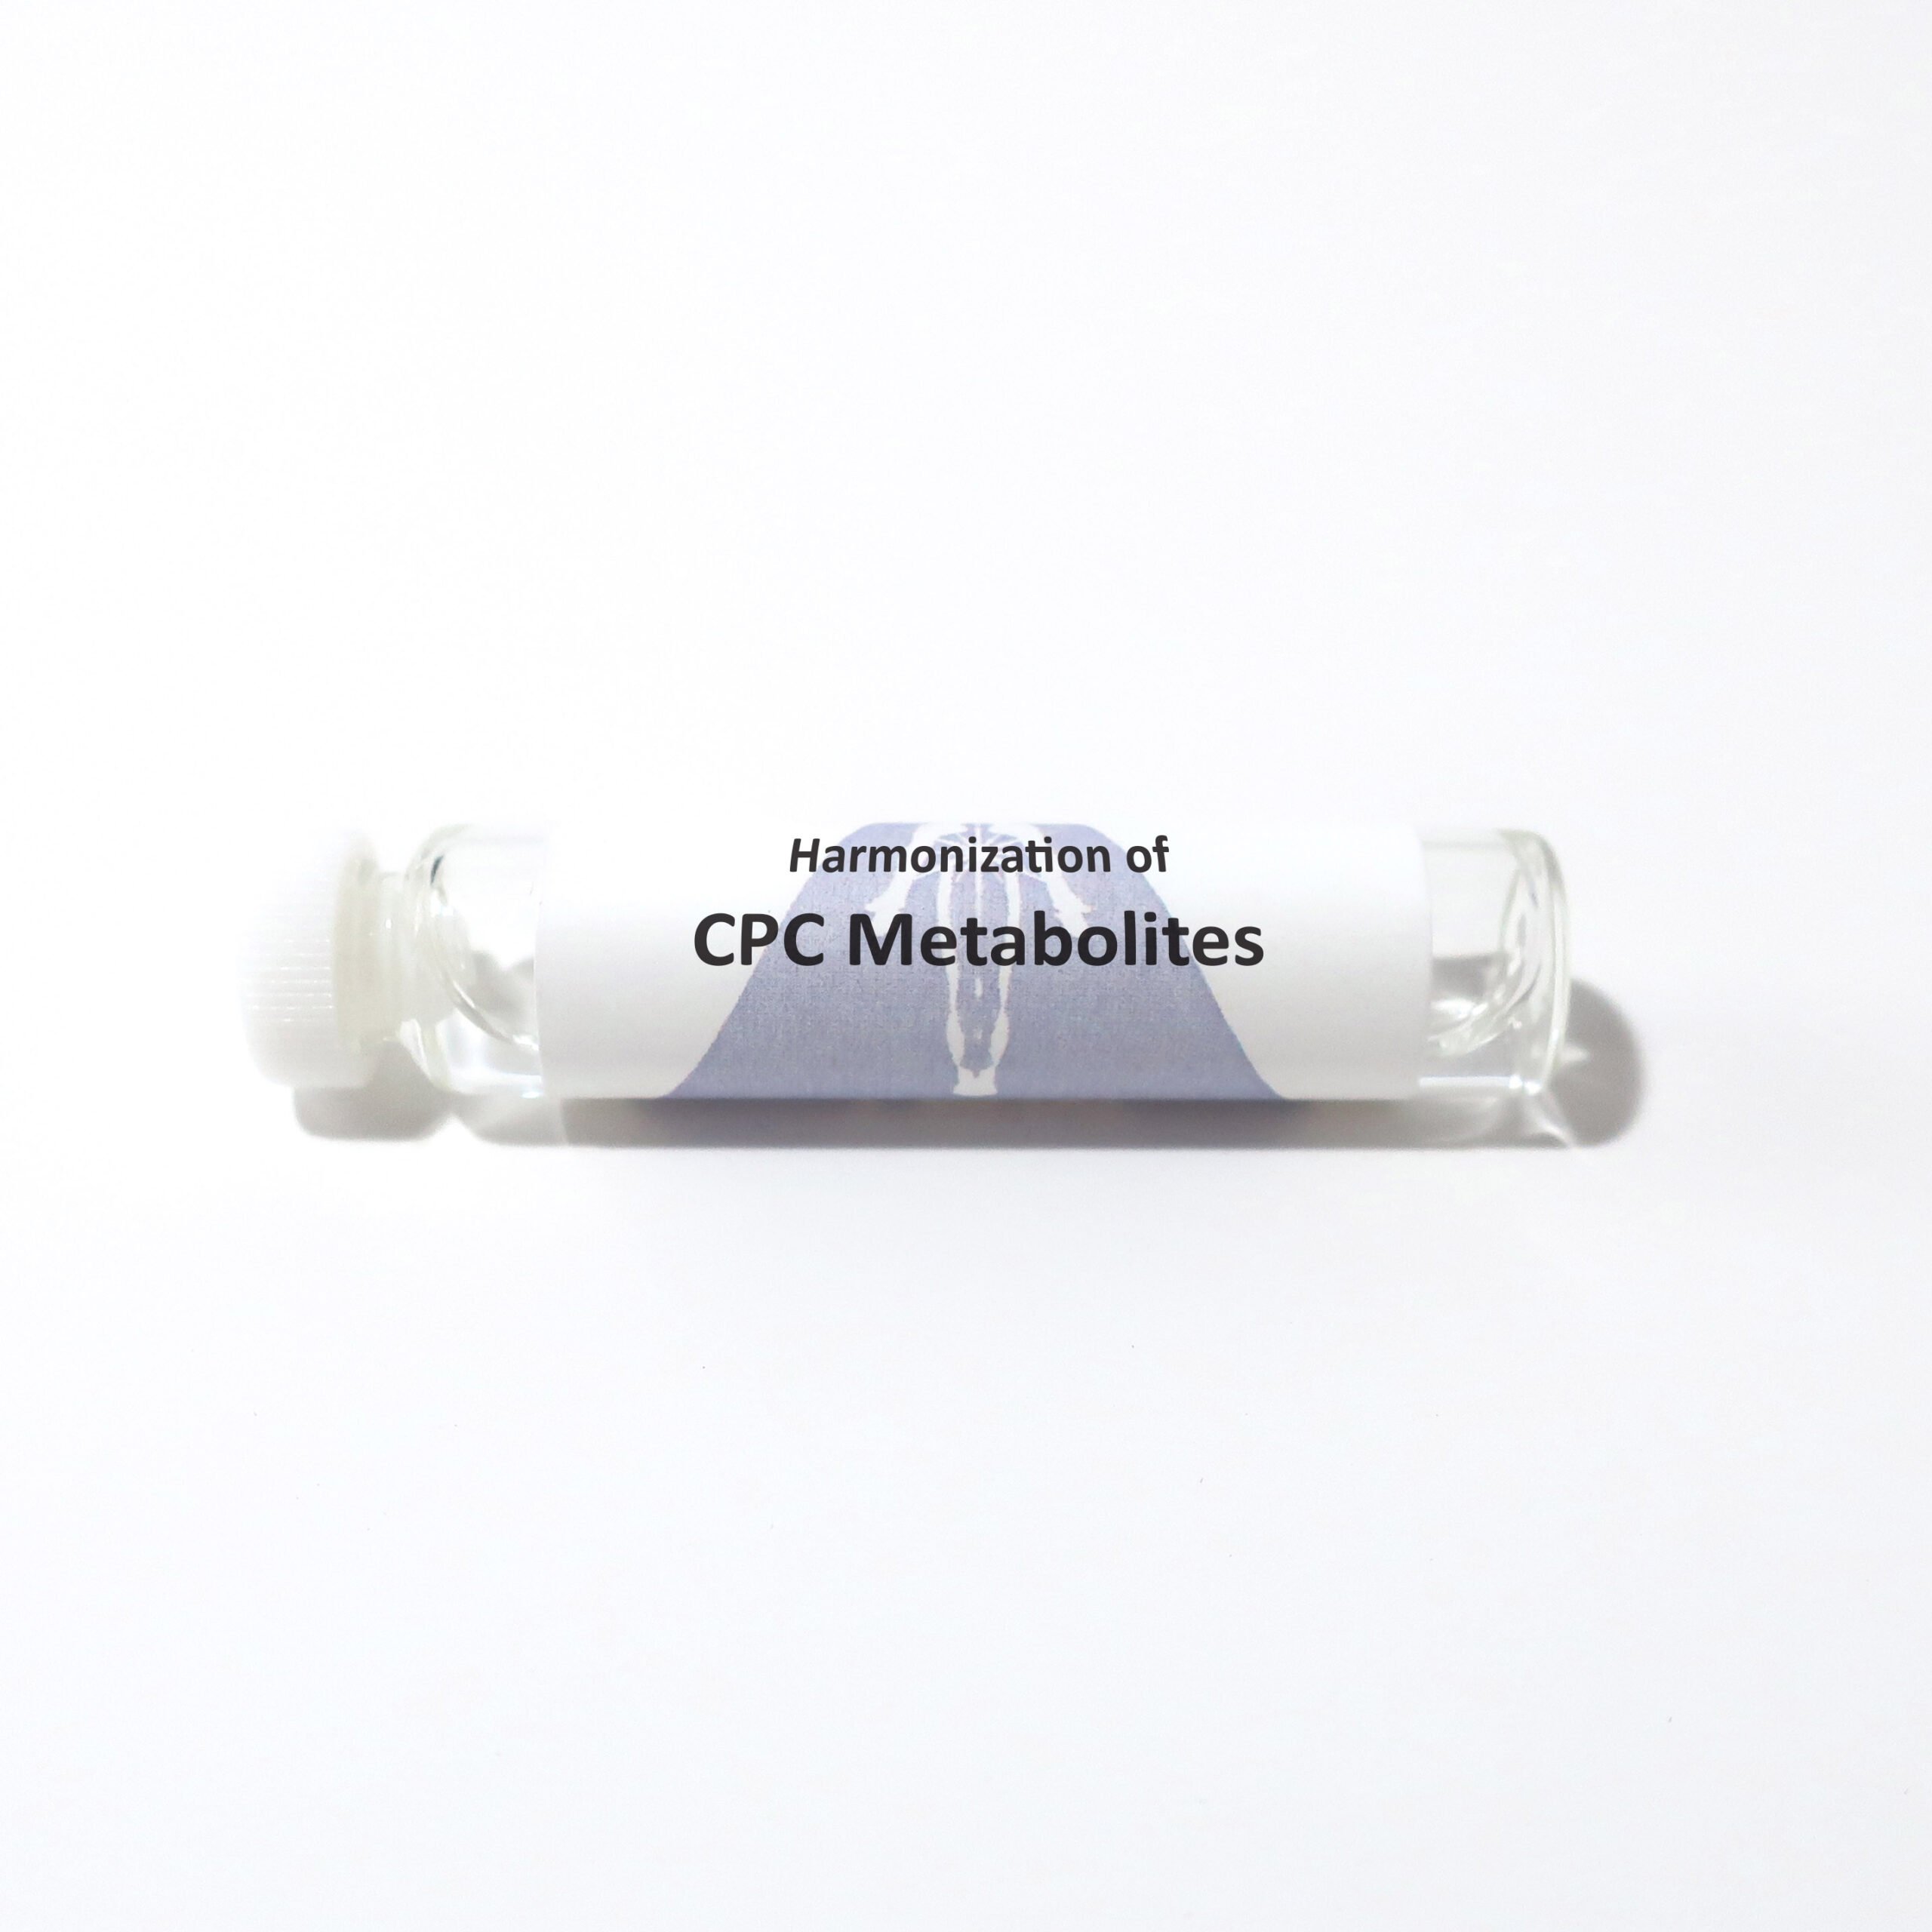 CPC Metabolites